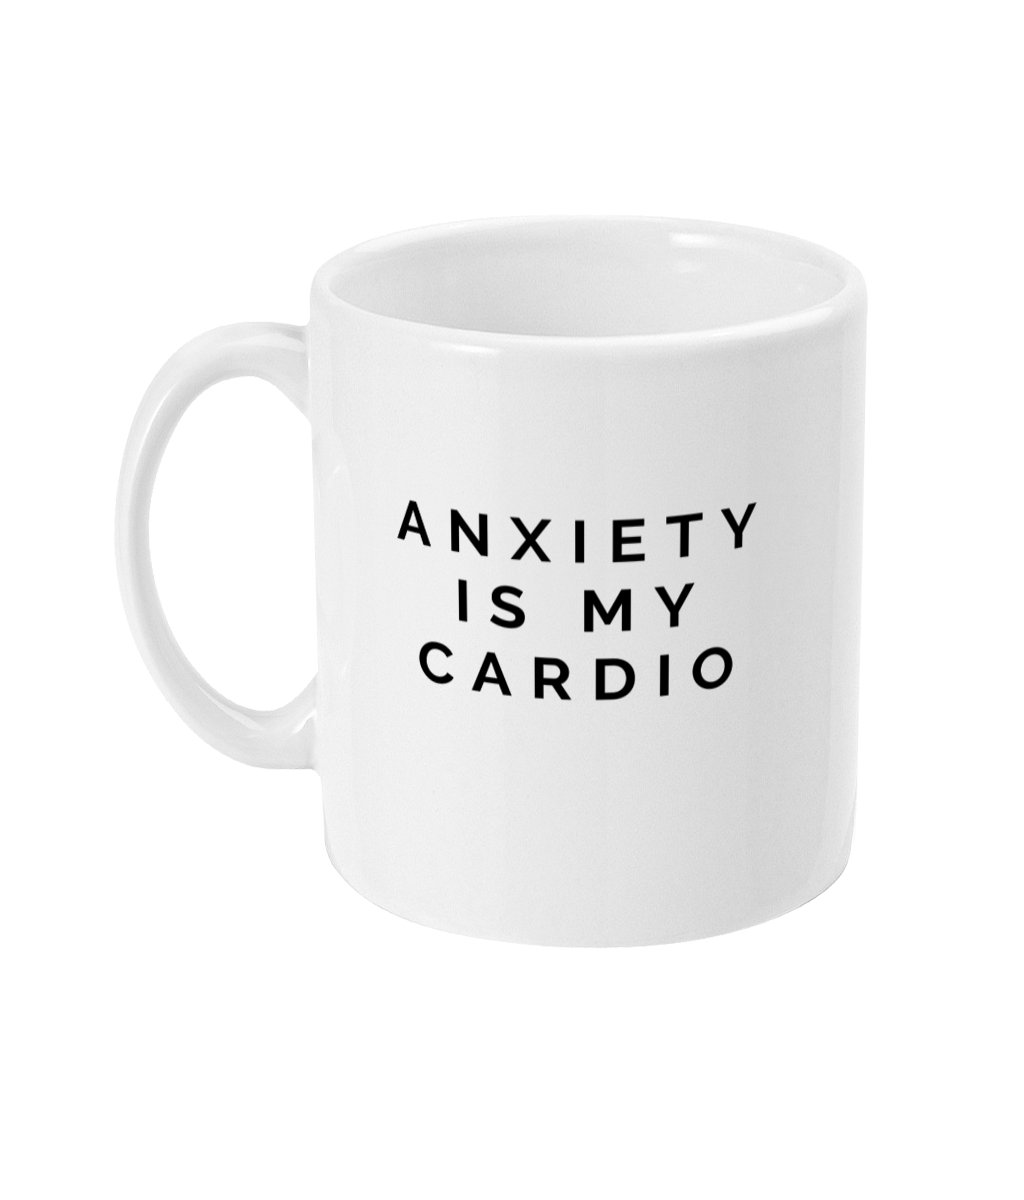 mug that reads: anxiety is my cardio